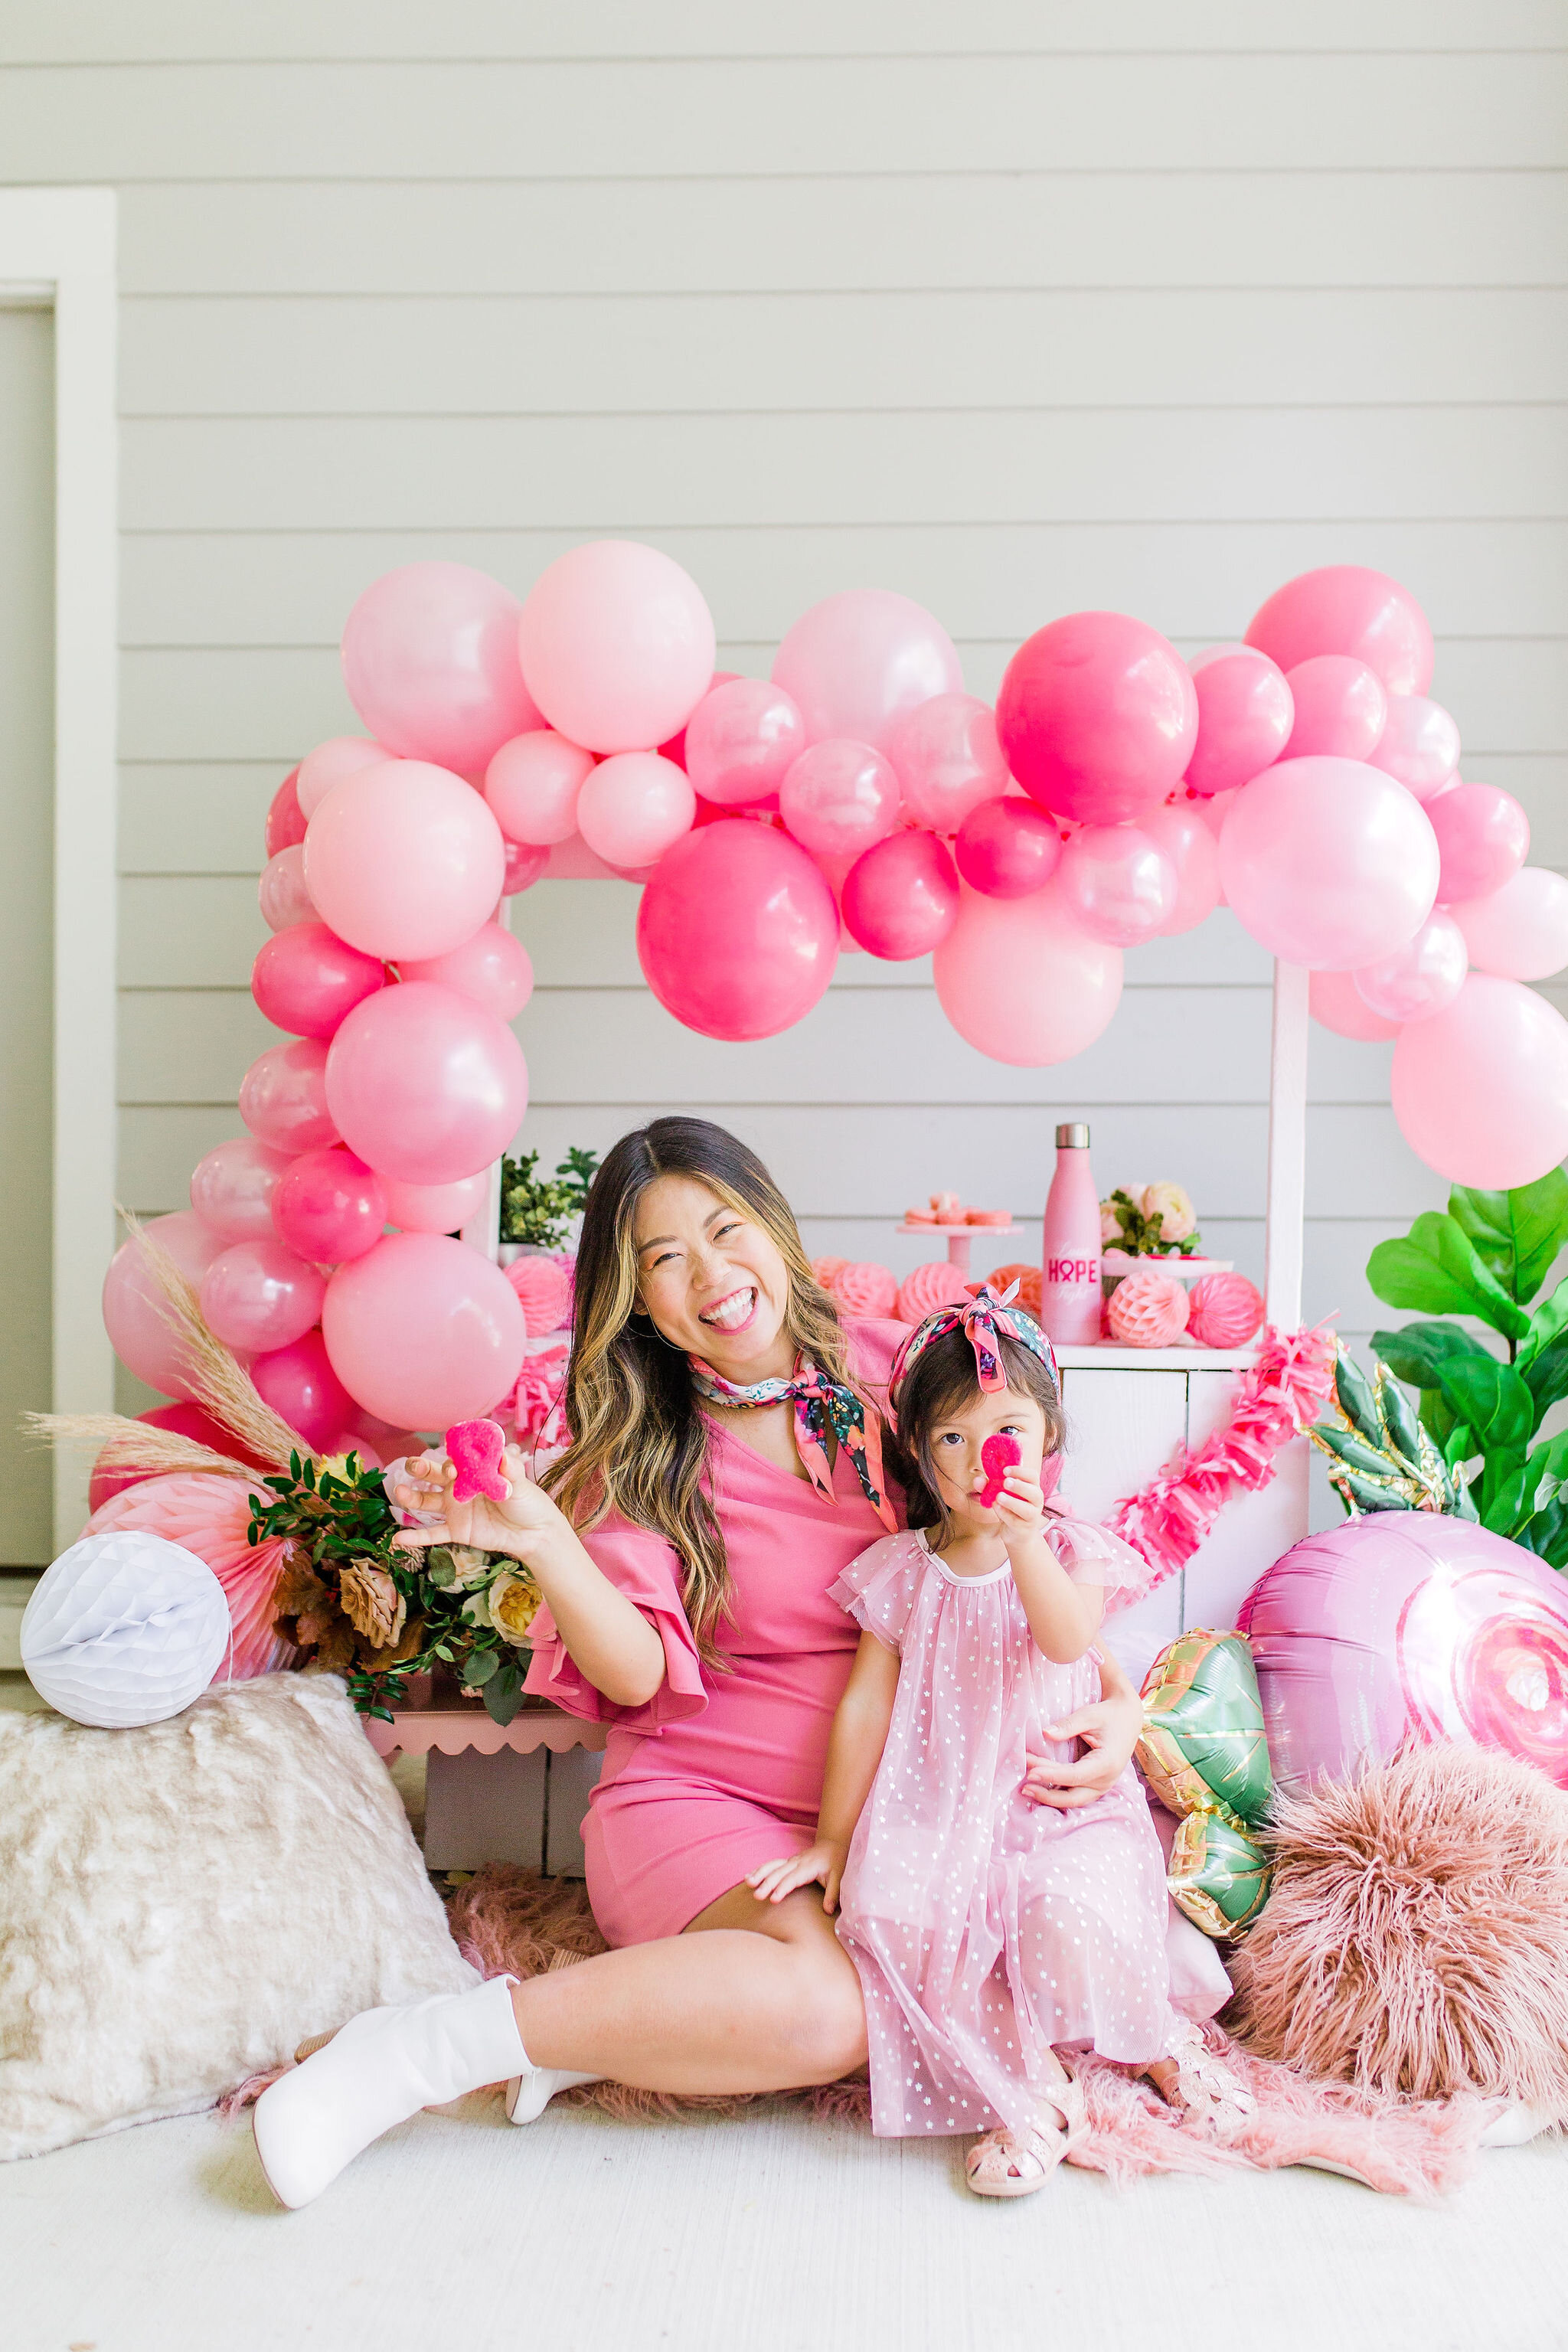 DIY Pink Macaron Cookie Stand - Stage Pink October pink Balloon Garland Party Boobie Macaron